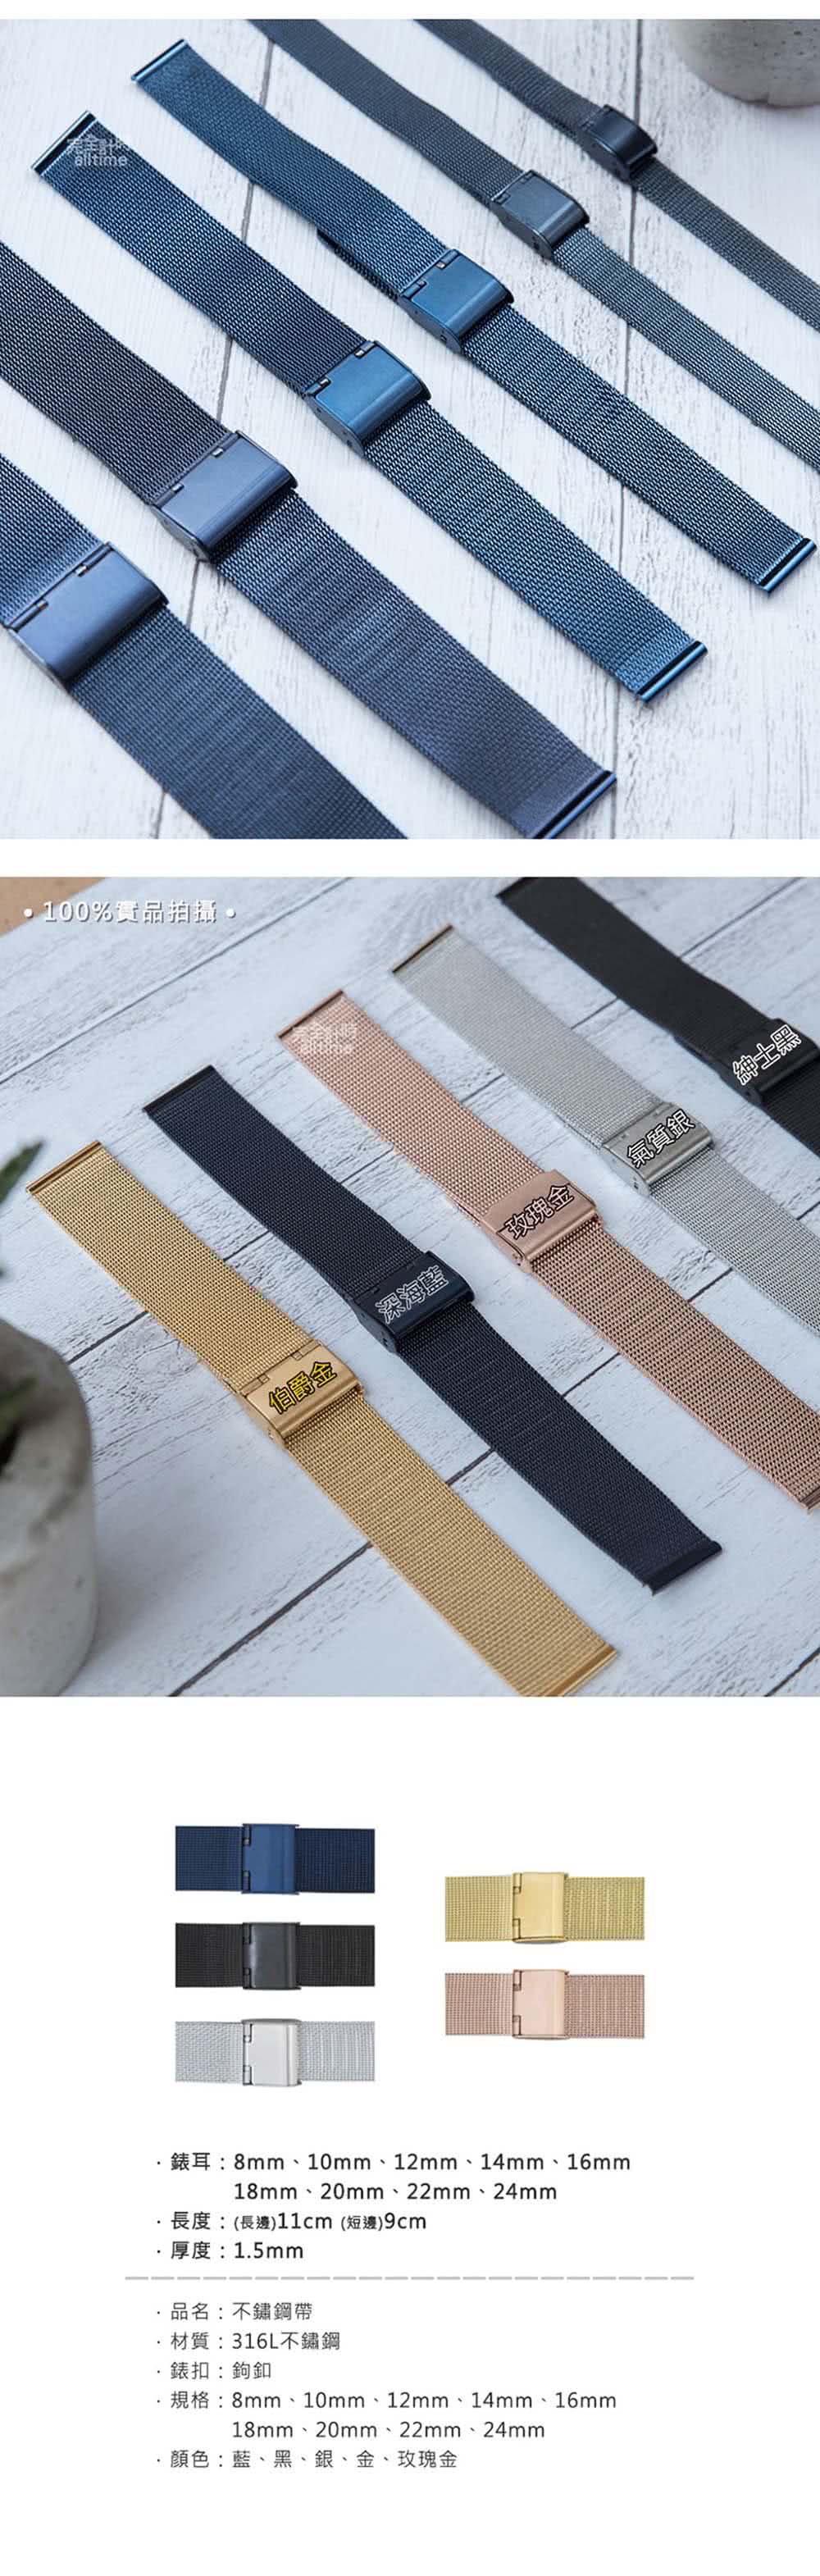 All Time 完全計時 進口精緻不鏽鋼編織米蘭錶帶 細編織代用帶玫瑰金時尚經典米蘭風格錶帶 Momo購物網